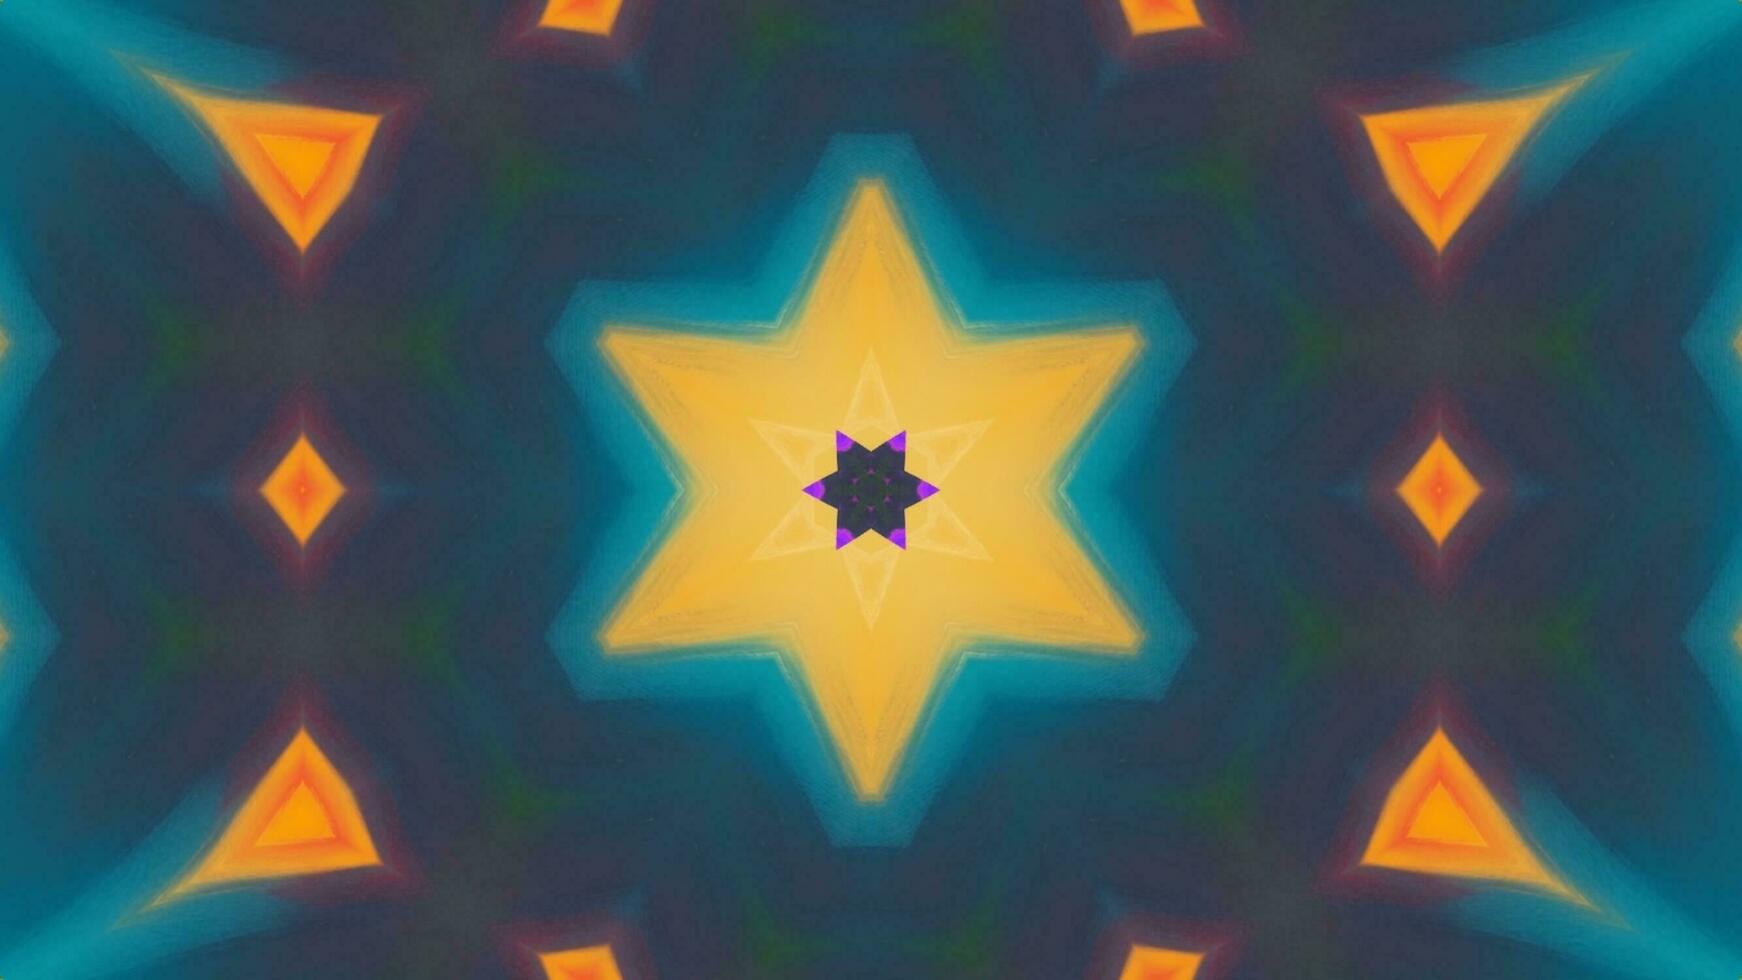 fantastisk abstrakt kalejdoskop bakgrund. unik Flerfärgad mosaik- textur i sömlös geometrisk mönster foto